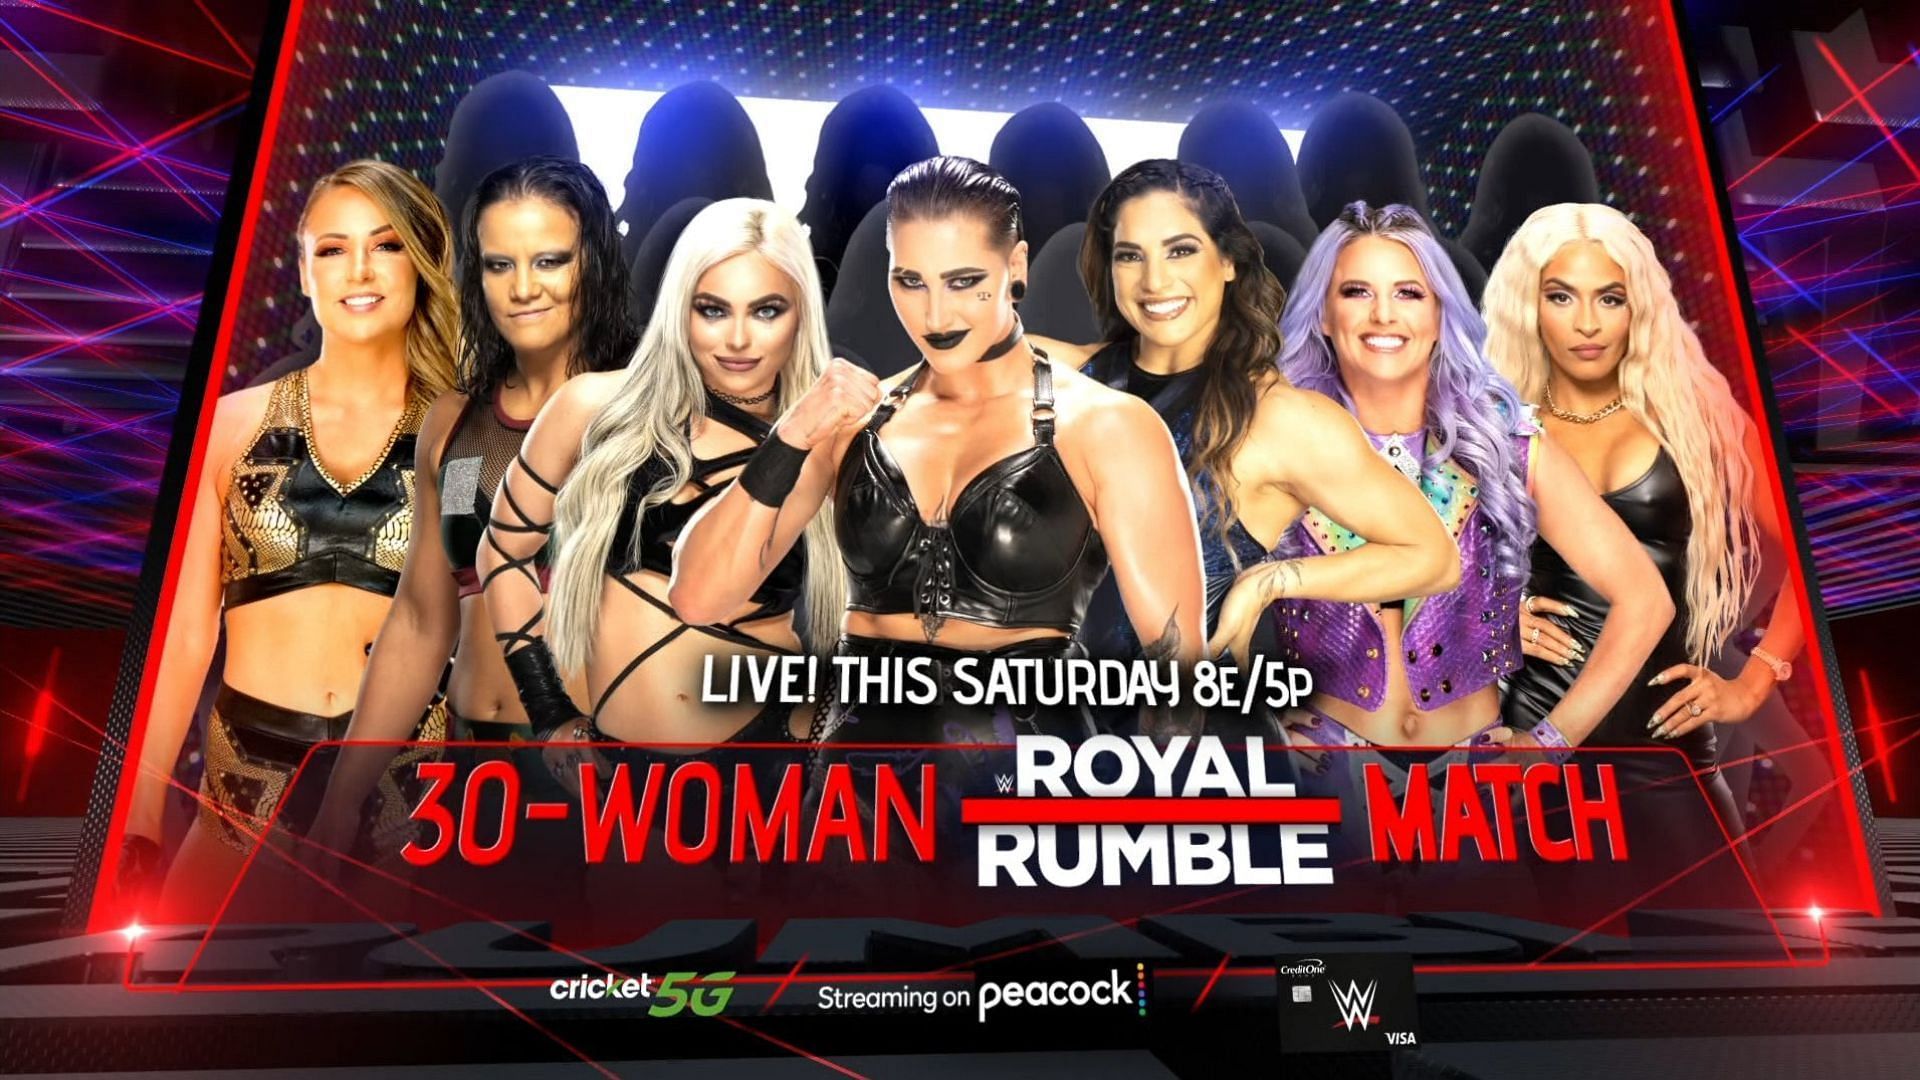 Ronda Rousey won the Women